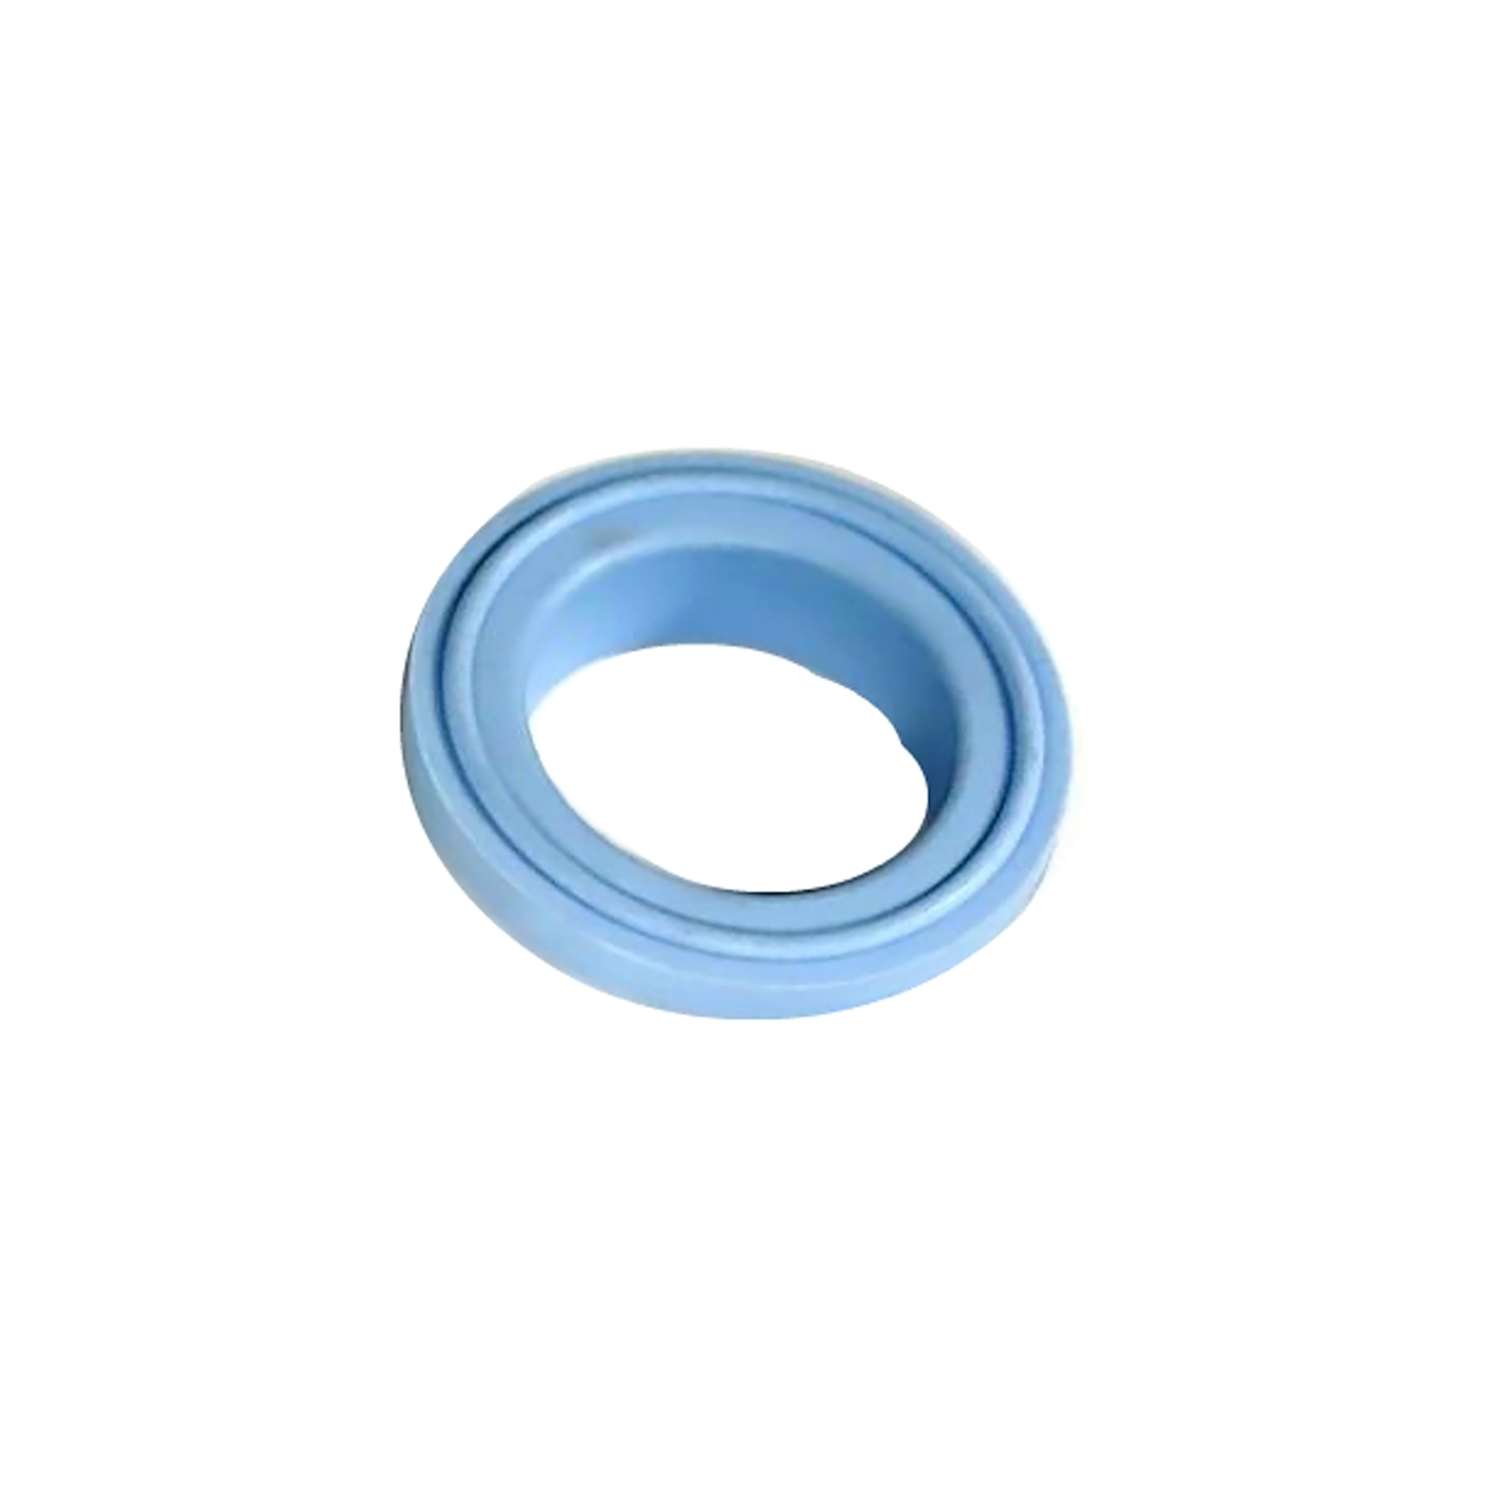 MOPAR PARTS - Exhaust Gas Recirculation(EGR) Tube Seal - MOP 4667431